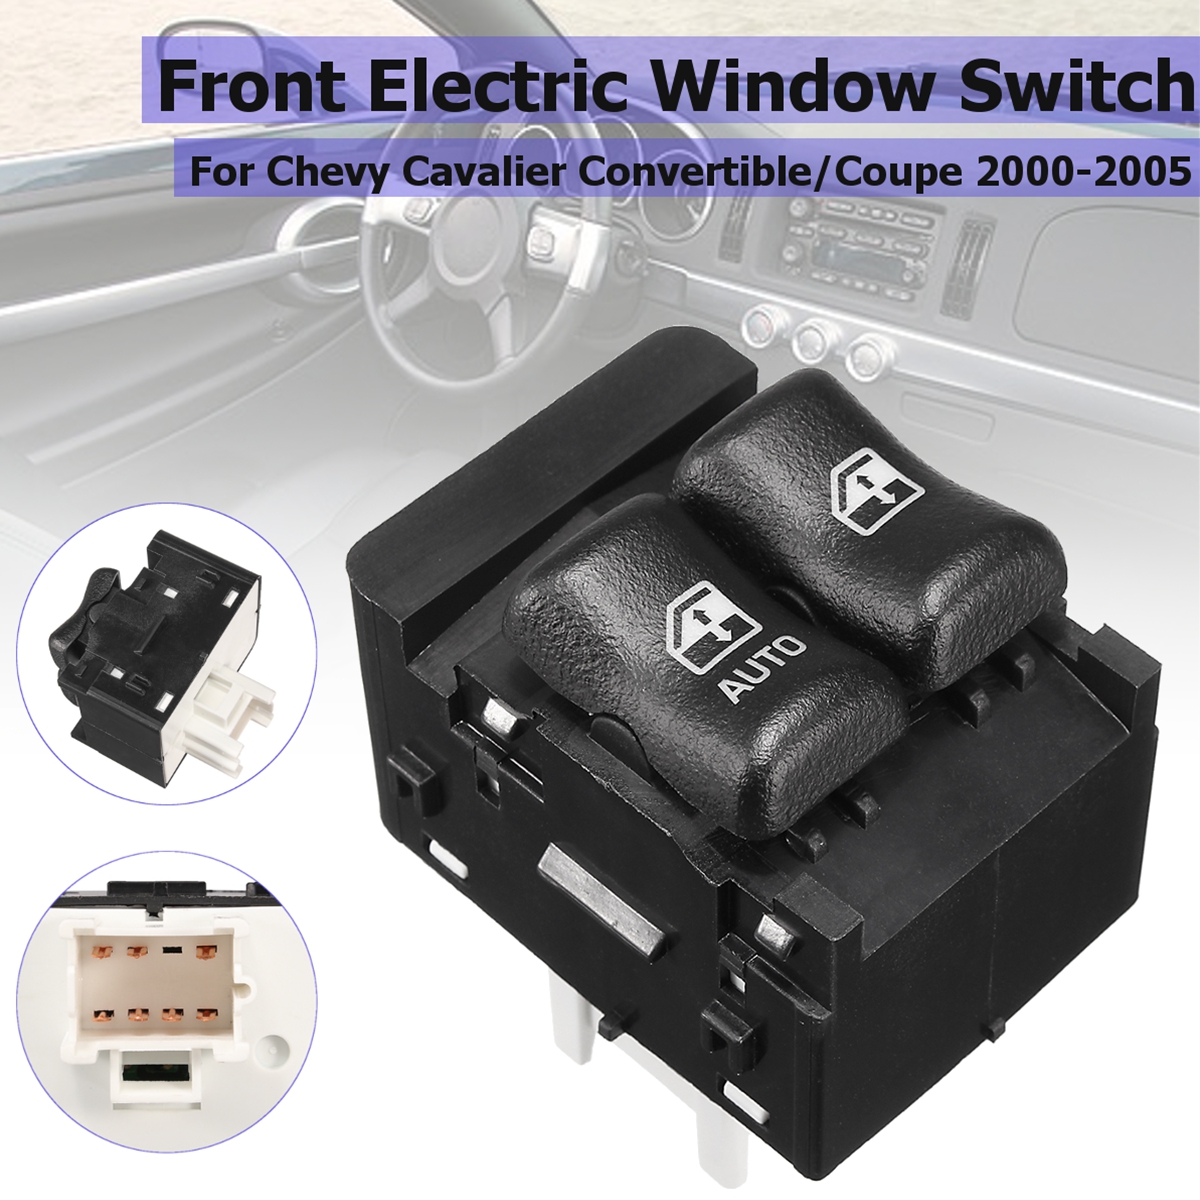 New Power Window Master Control Switch for 2000-2005 Chevy Cavalier 2 door